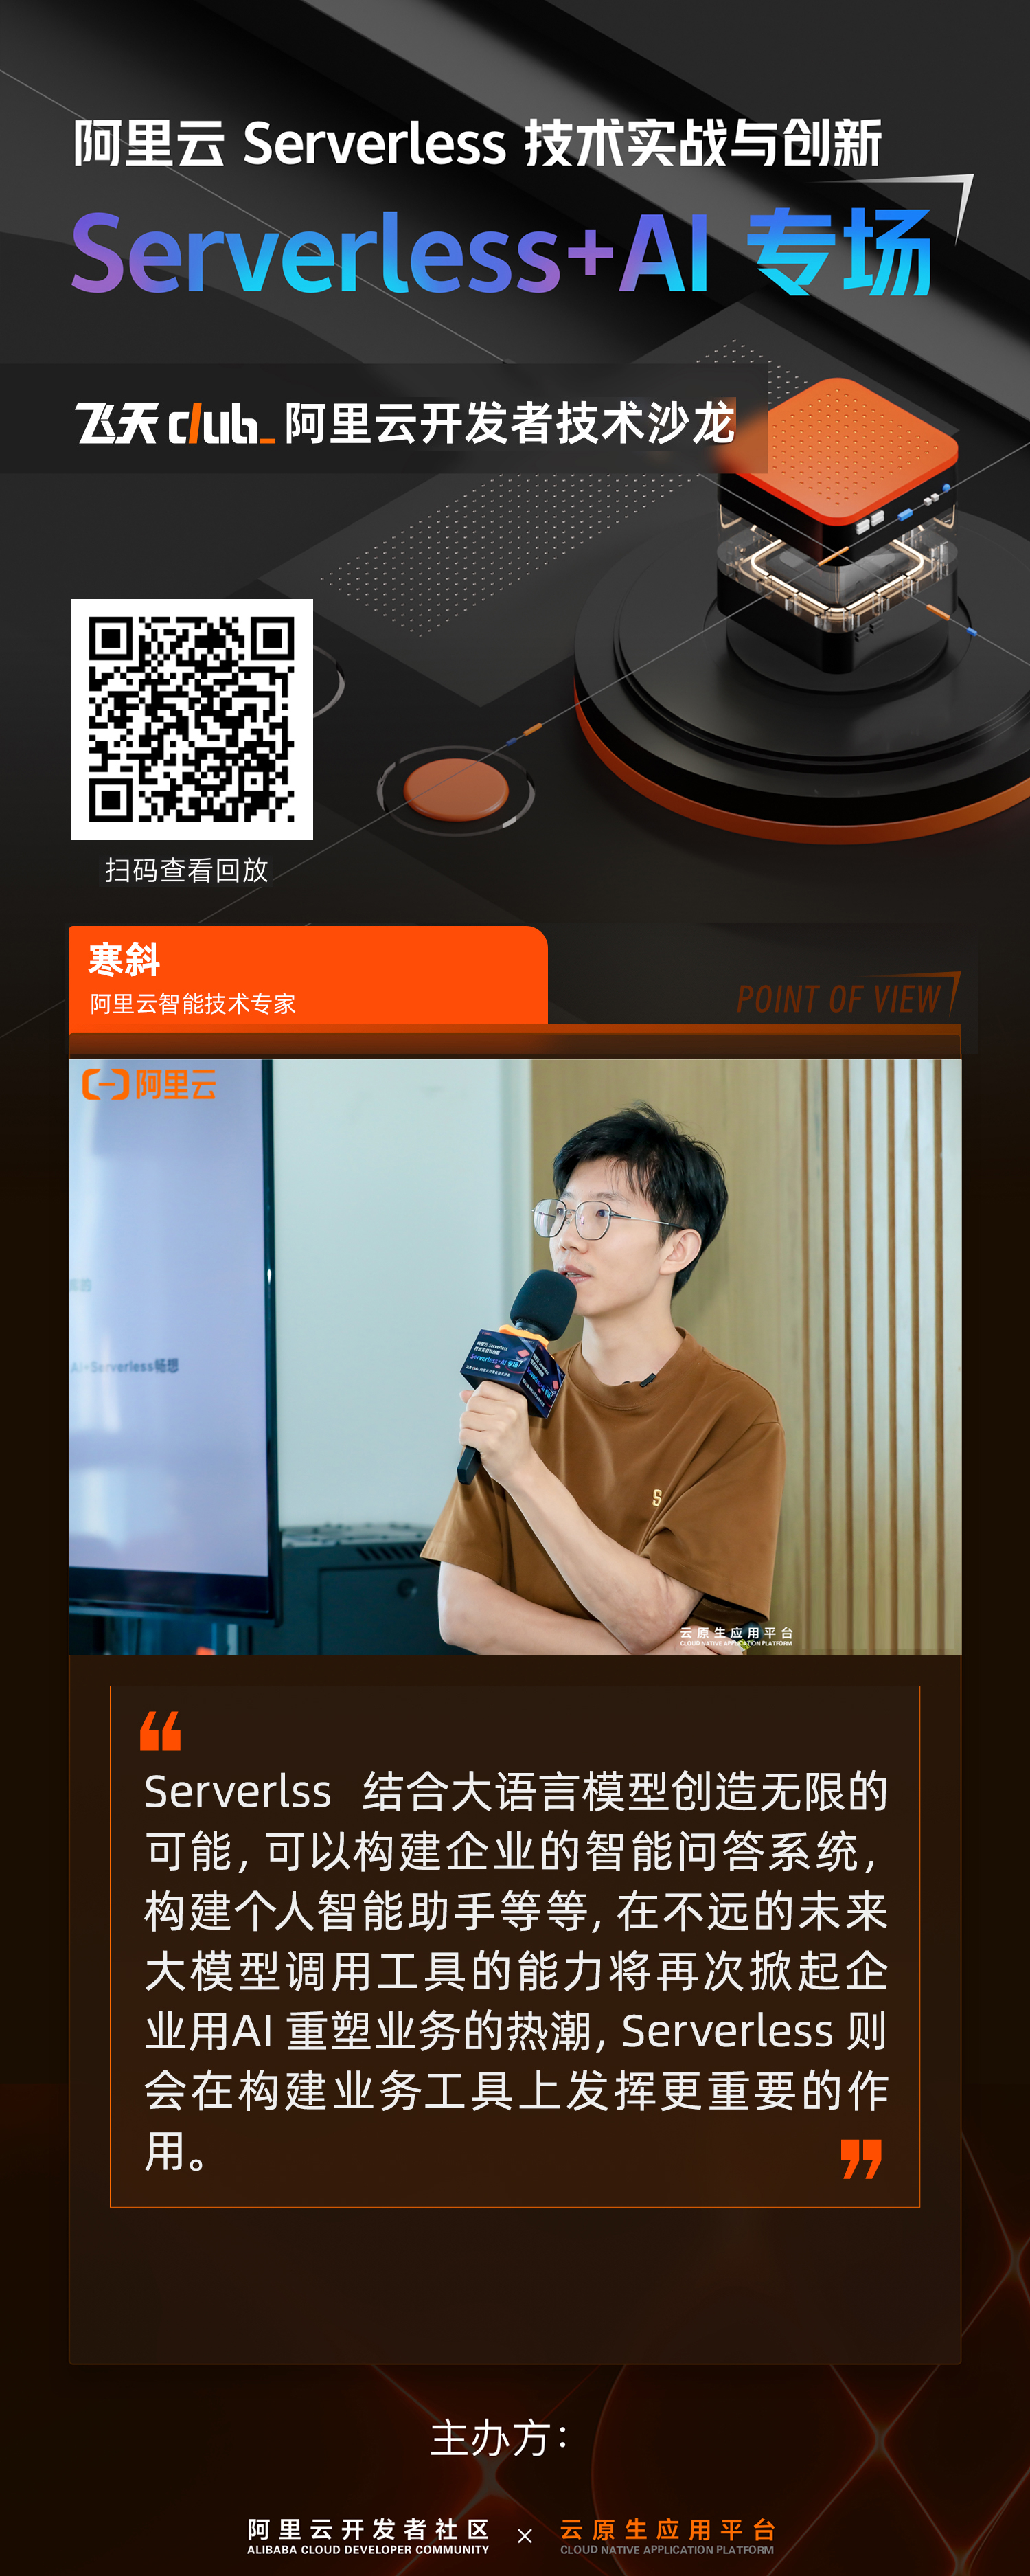 Lecturer poster Han Xie.jpg